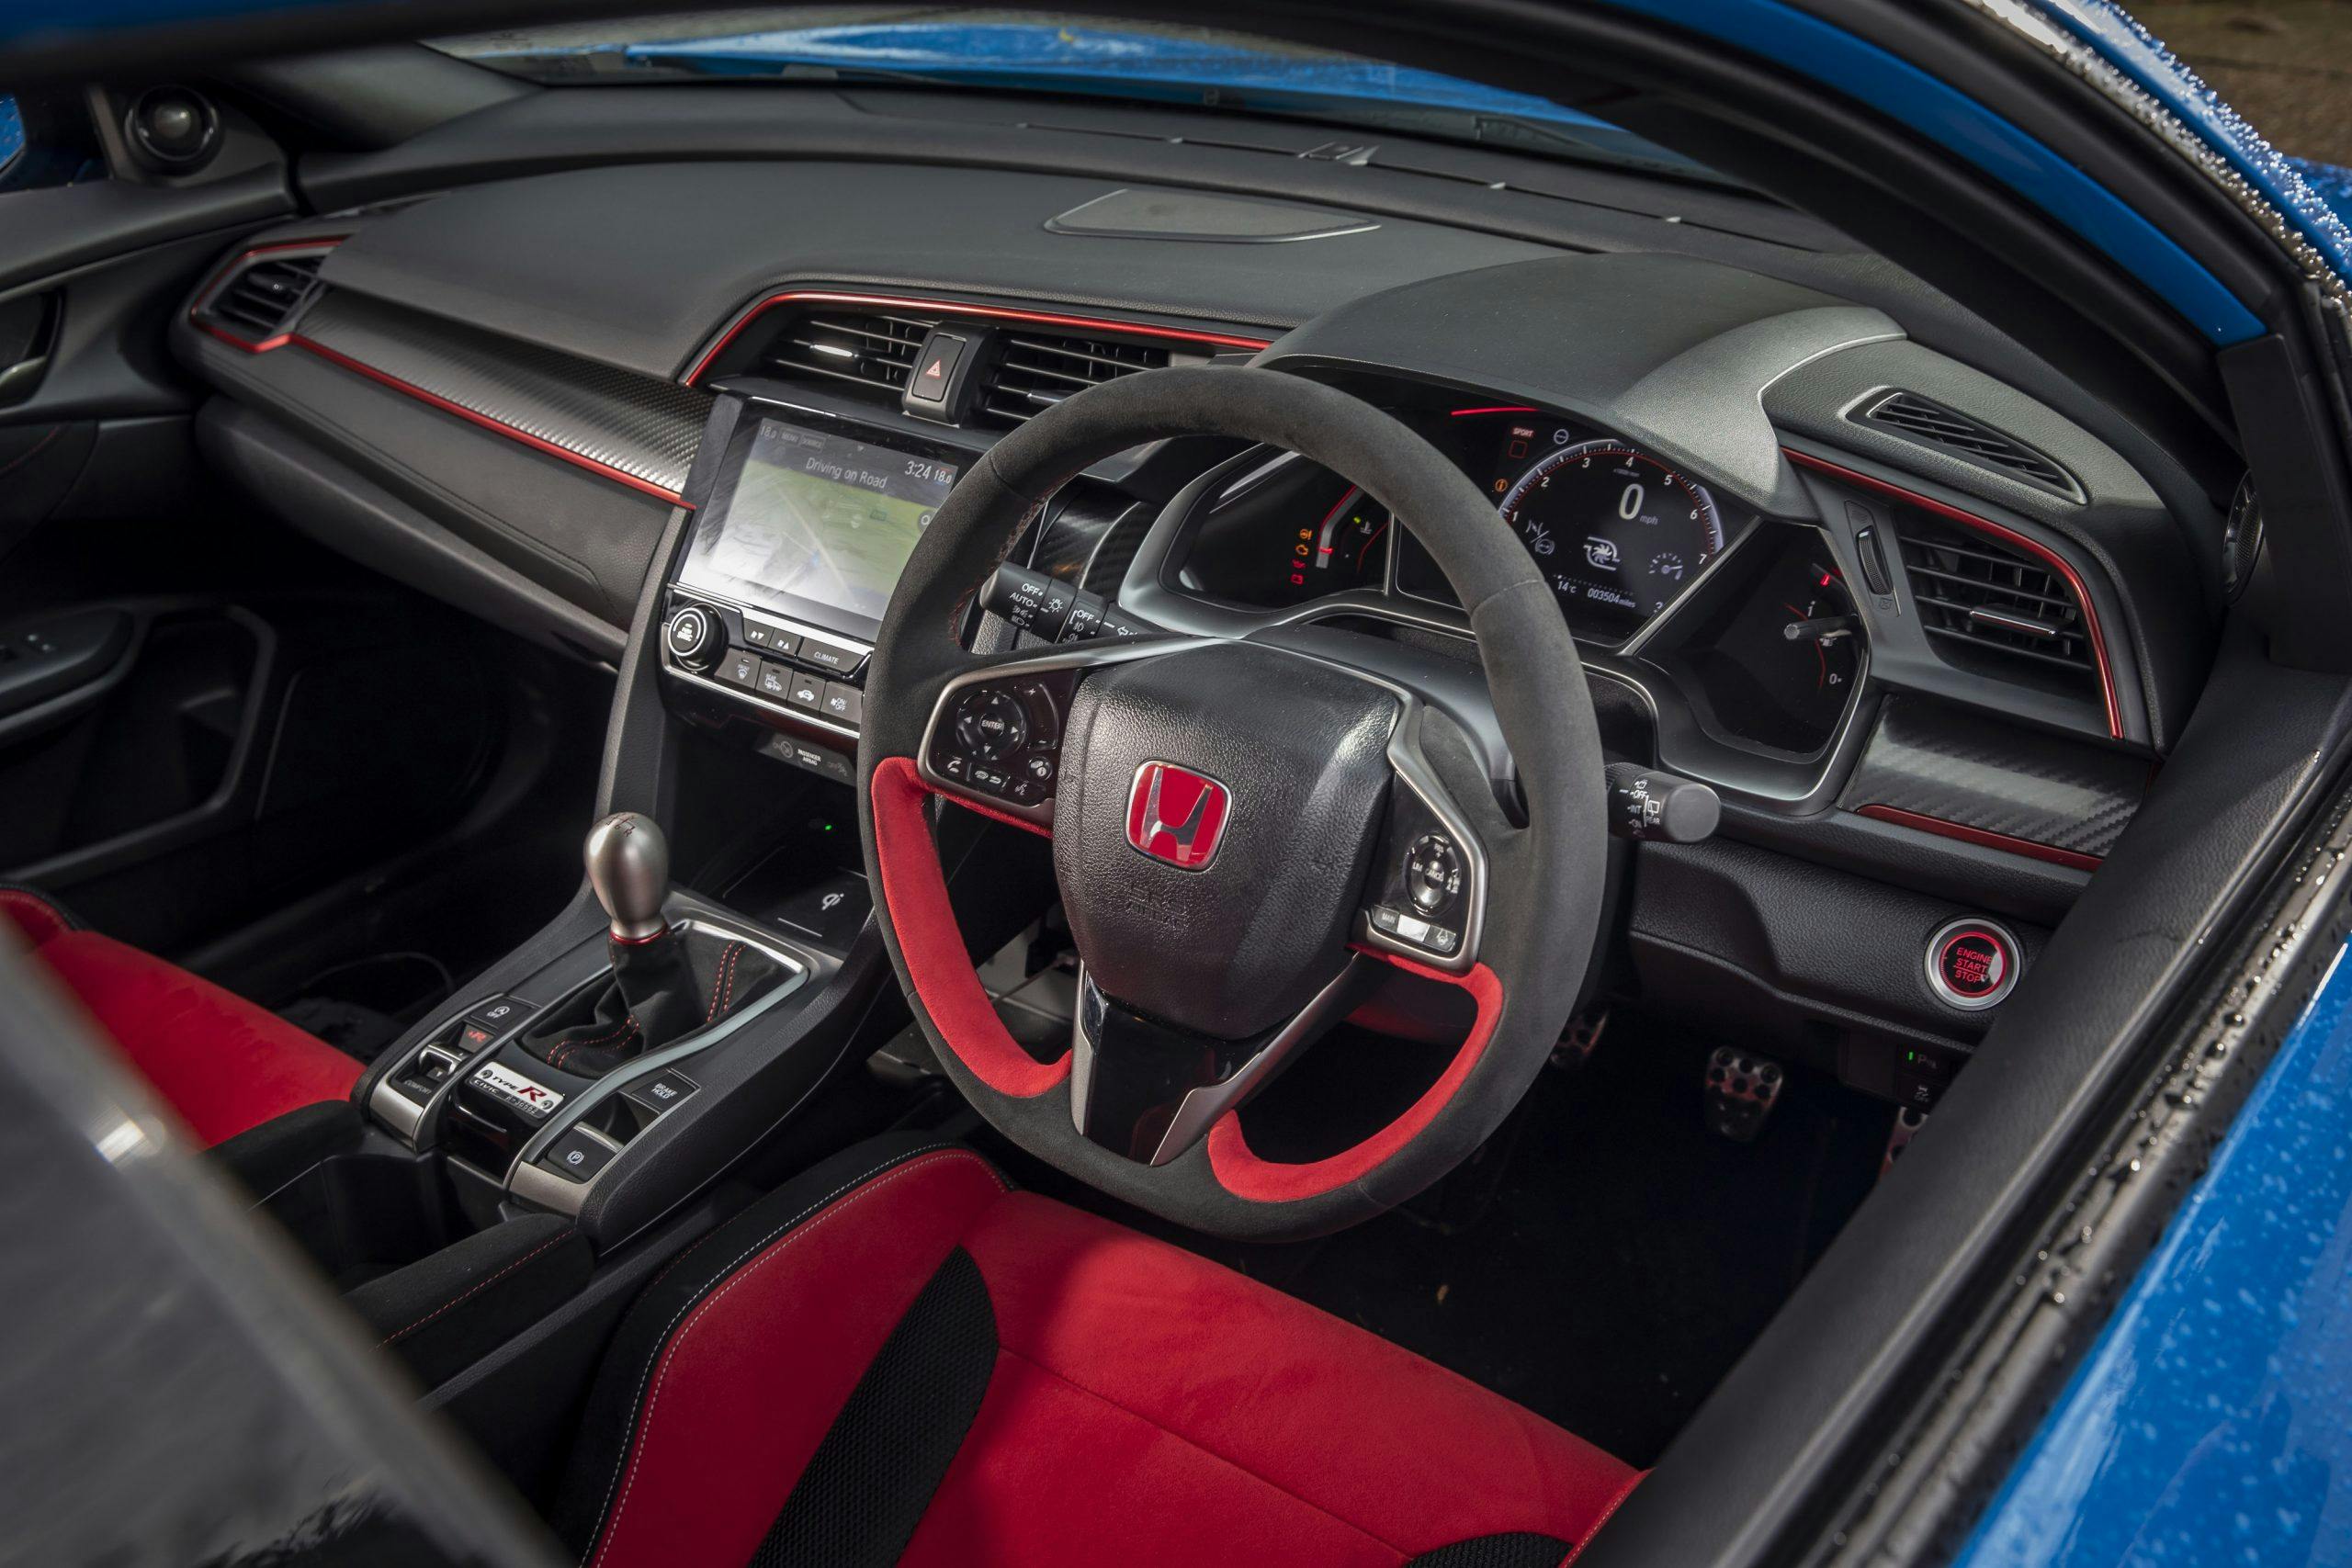 Honda Civic Type-R interior steering wheel